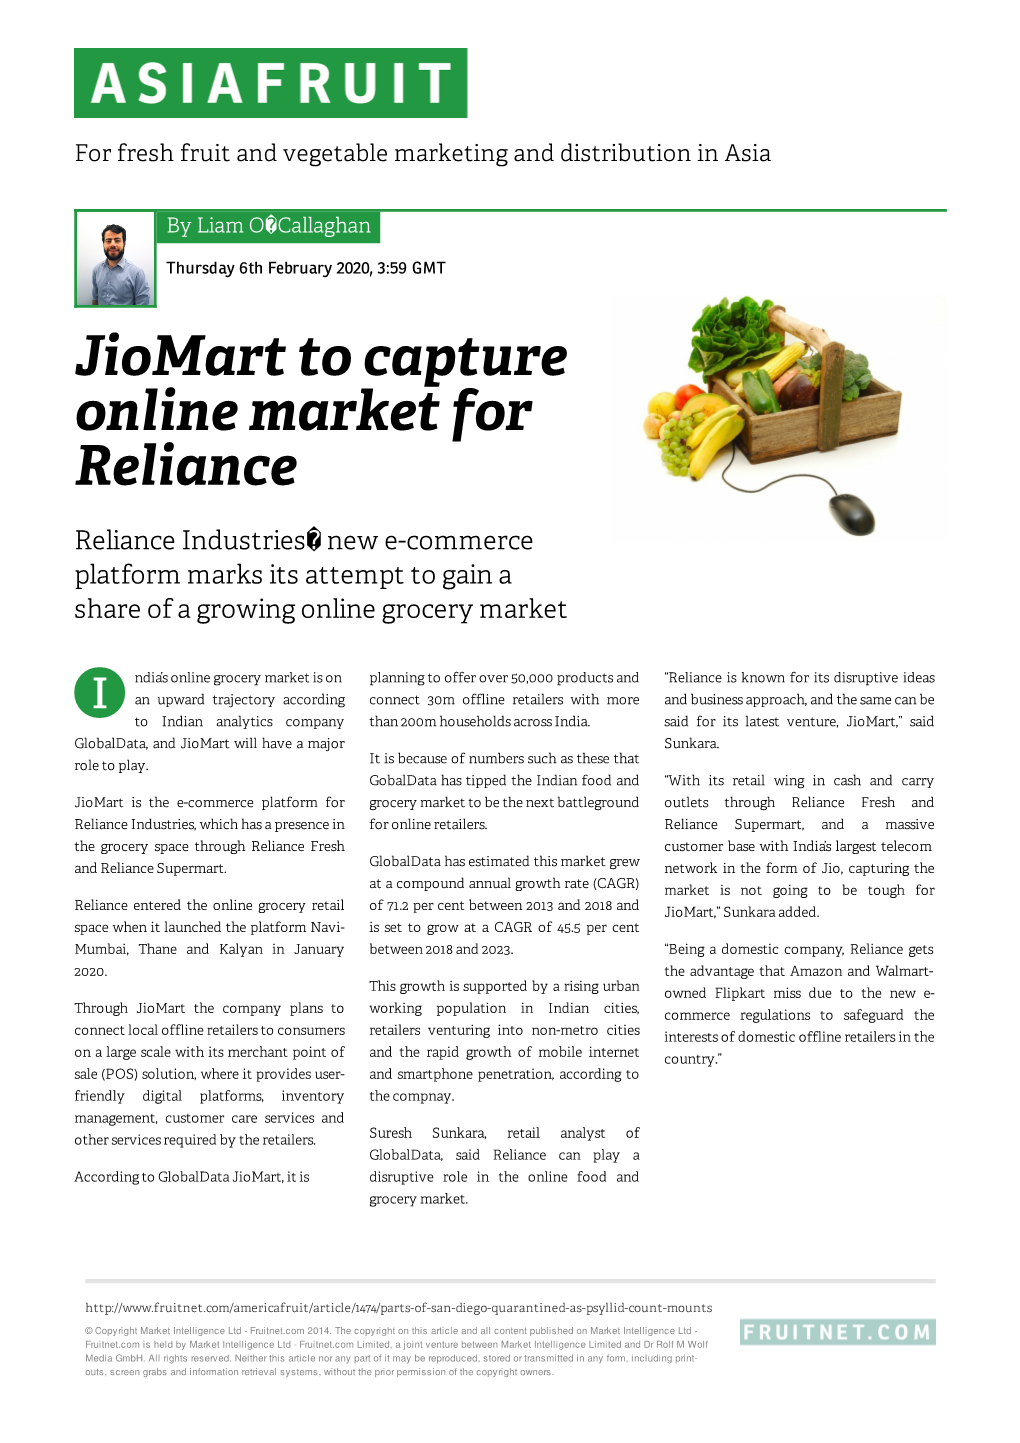 Jiomart to Capture Online Market for Reliance